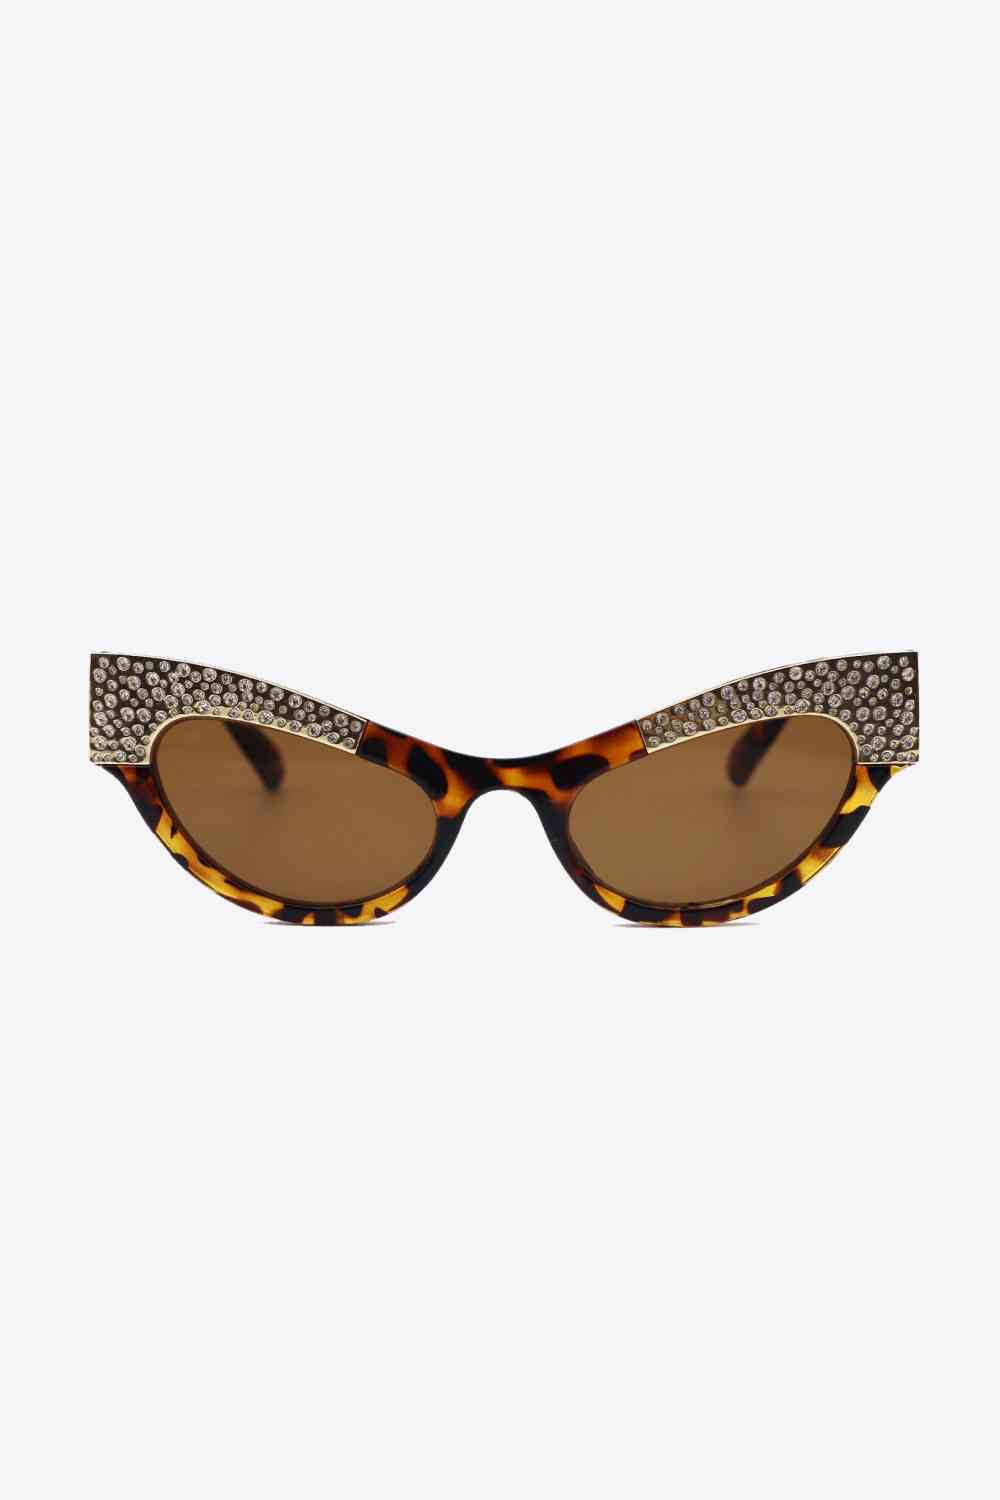 Villa Blvd Rhinestone Cat-Eye Sunglasses ☛ Multiple Colors Available ☚